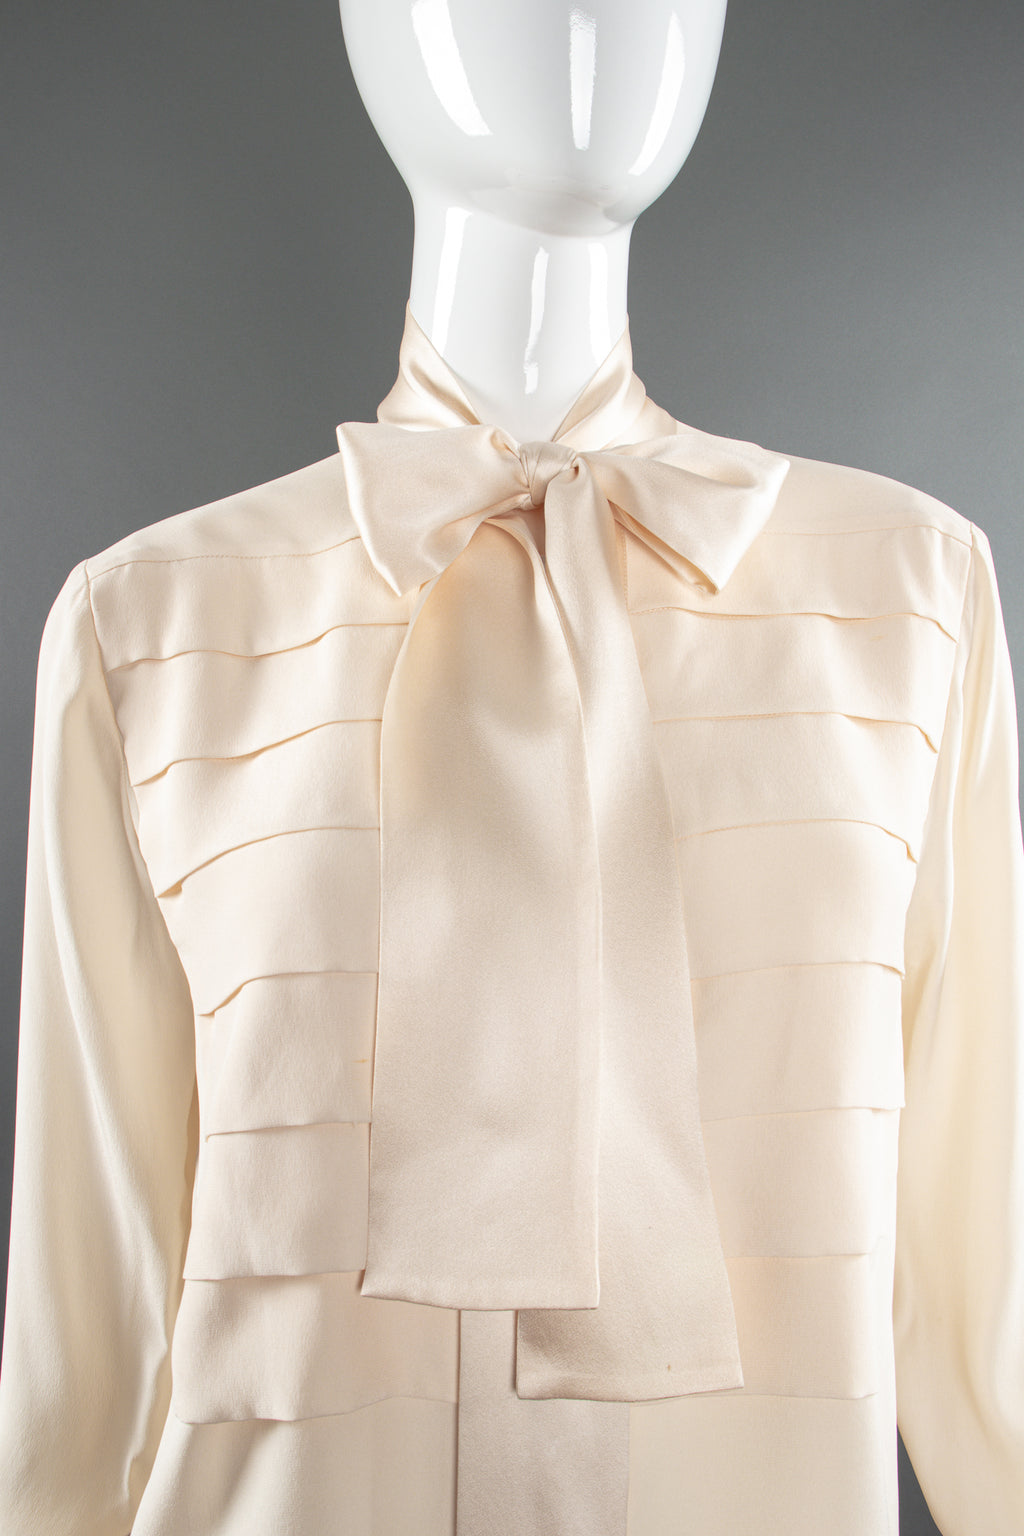 CHANEL Silk Shirt CC Logo Cufflinks Fuchsia-Black 1990's - Chelsea Vintage  Couture